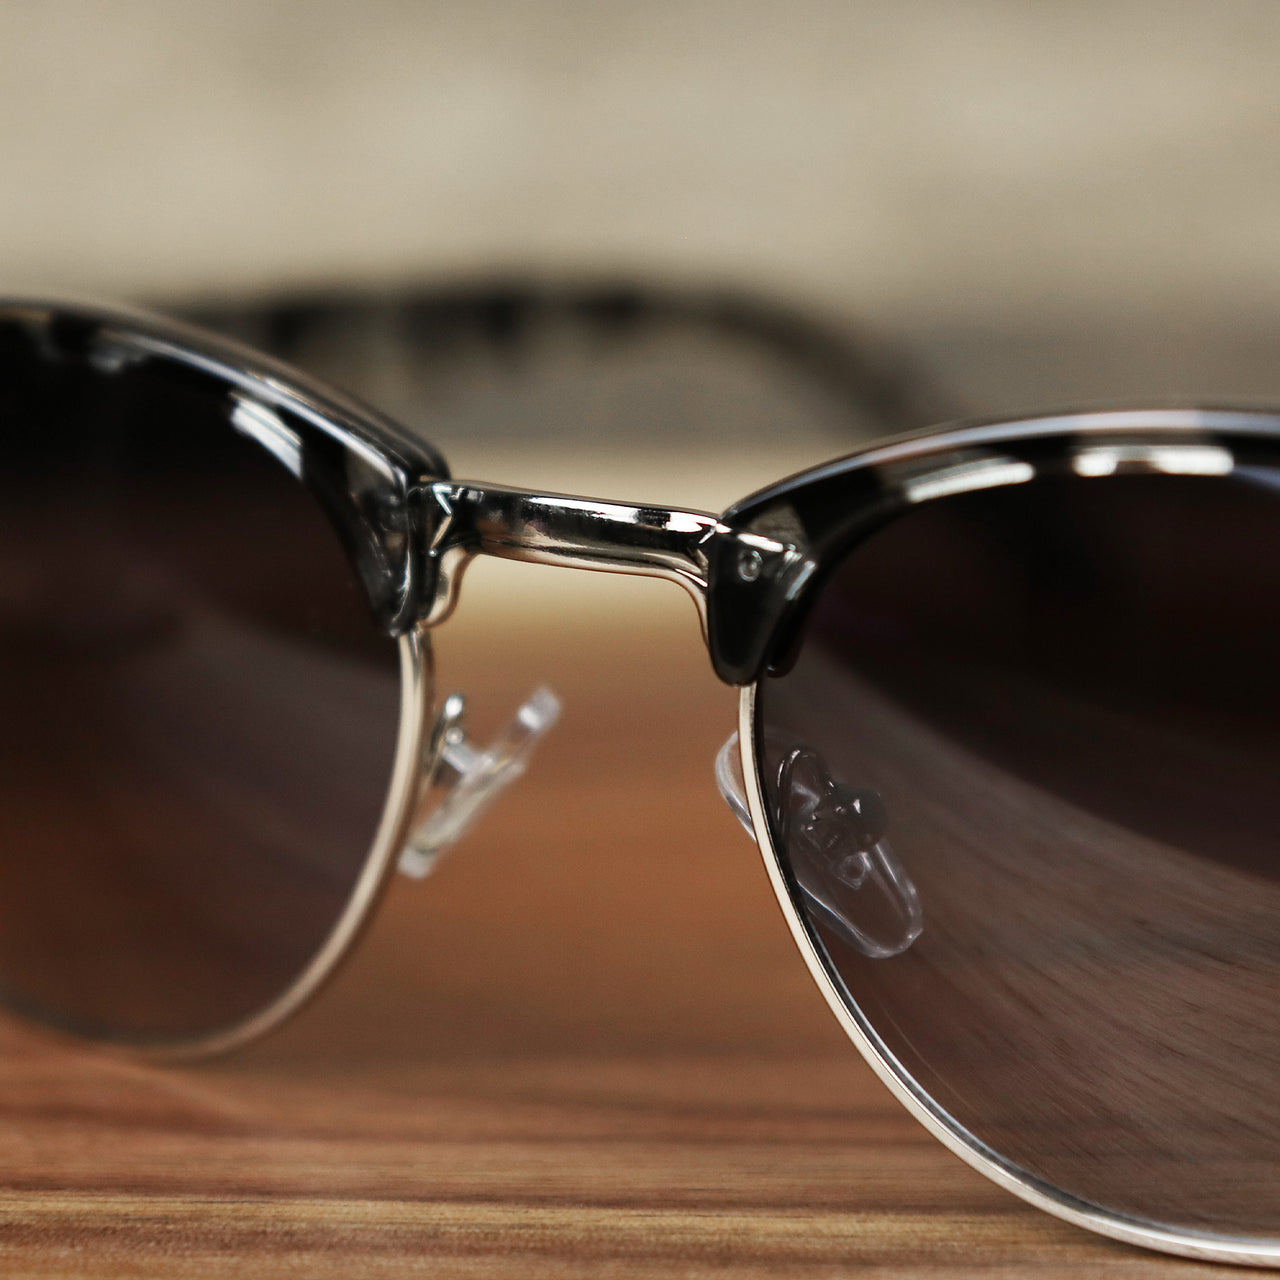 The bridge on the Round Frame Black Gradient Lens Sunglasses with Black Tortoise Silver Frame